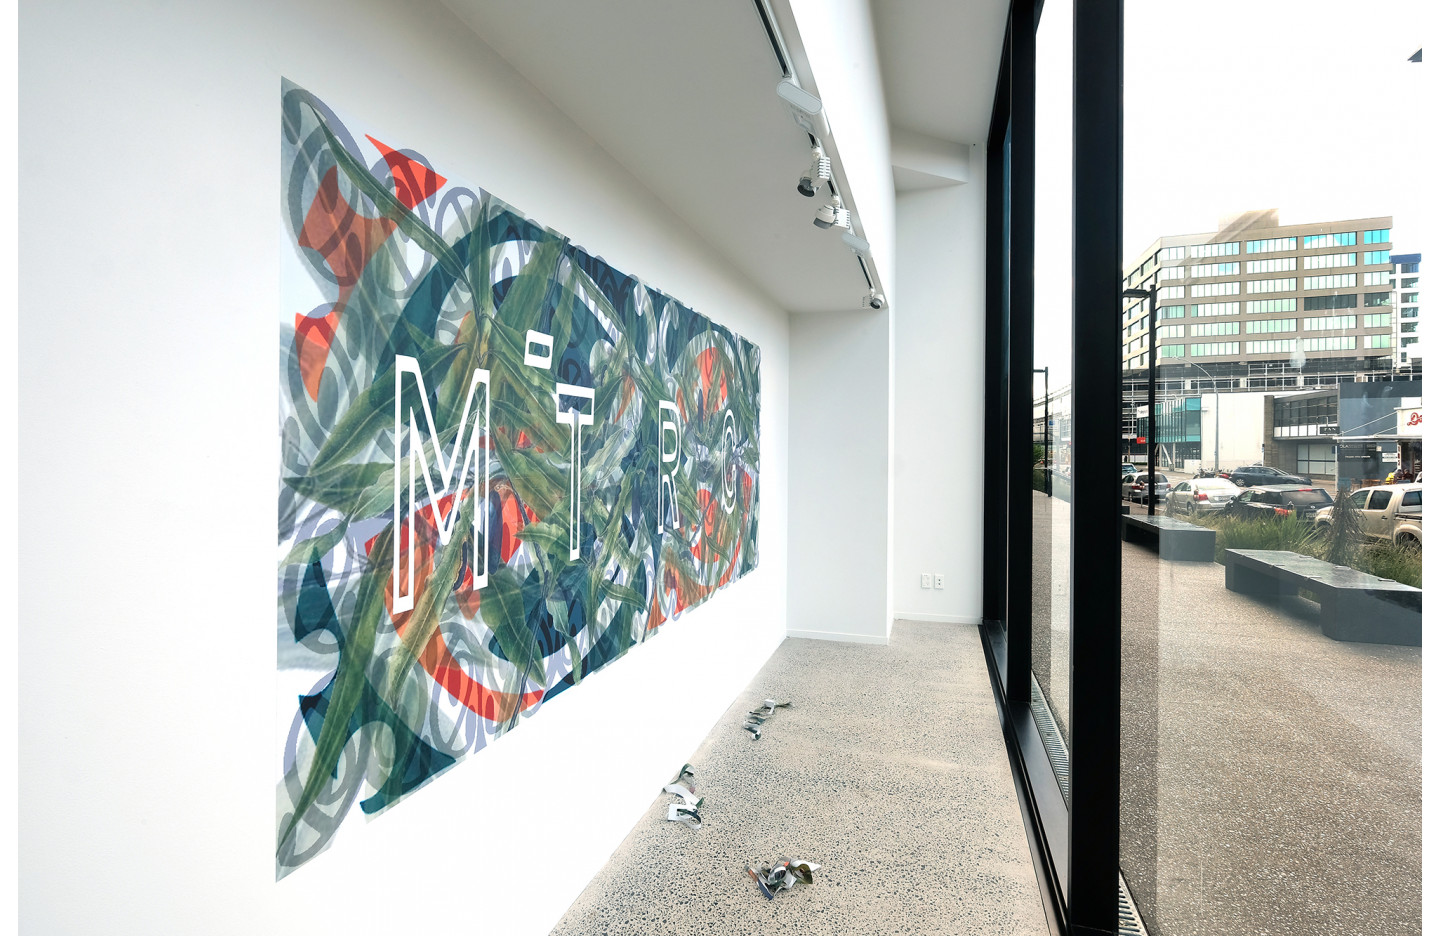 Installation view of Rautawa by Aimee Ratana in window gallery